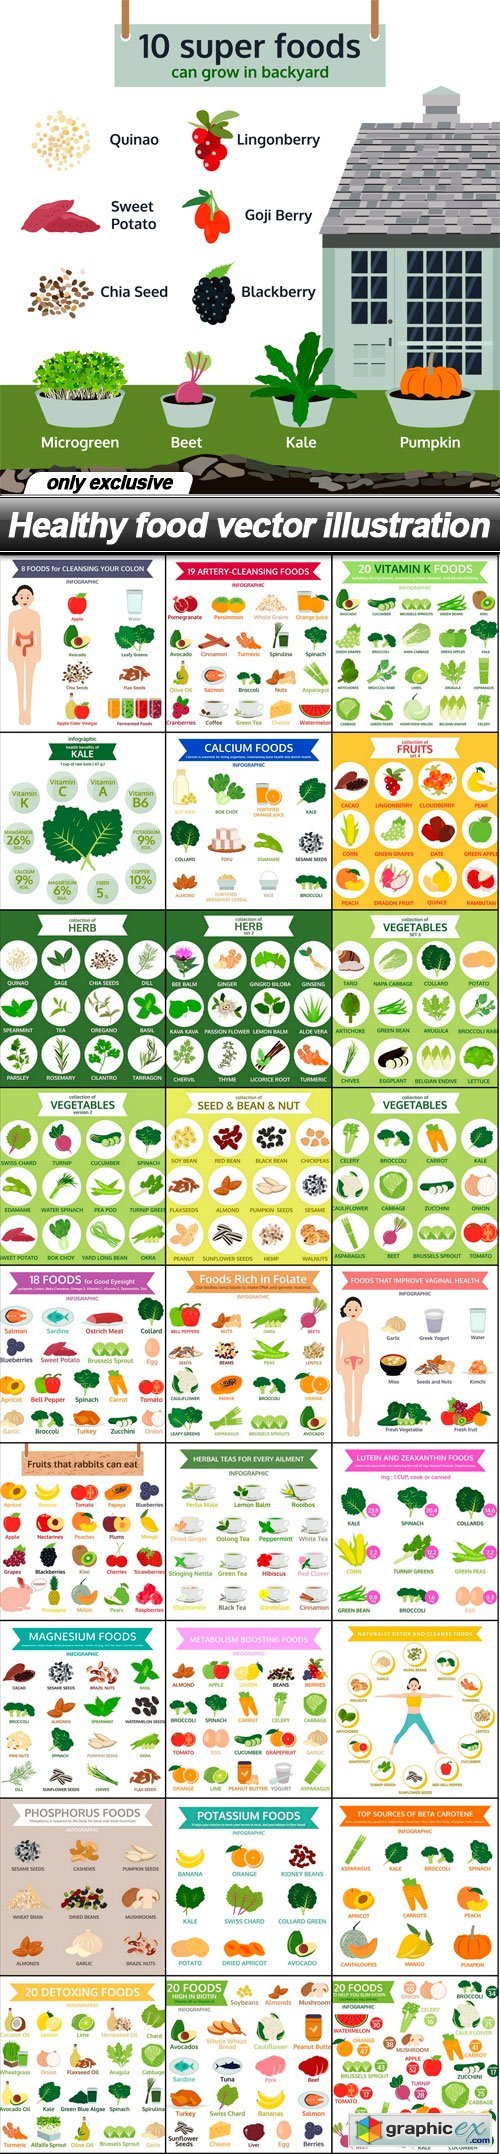 Healthy food vector illustration - 28 EPS